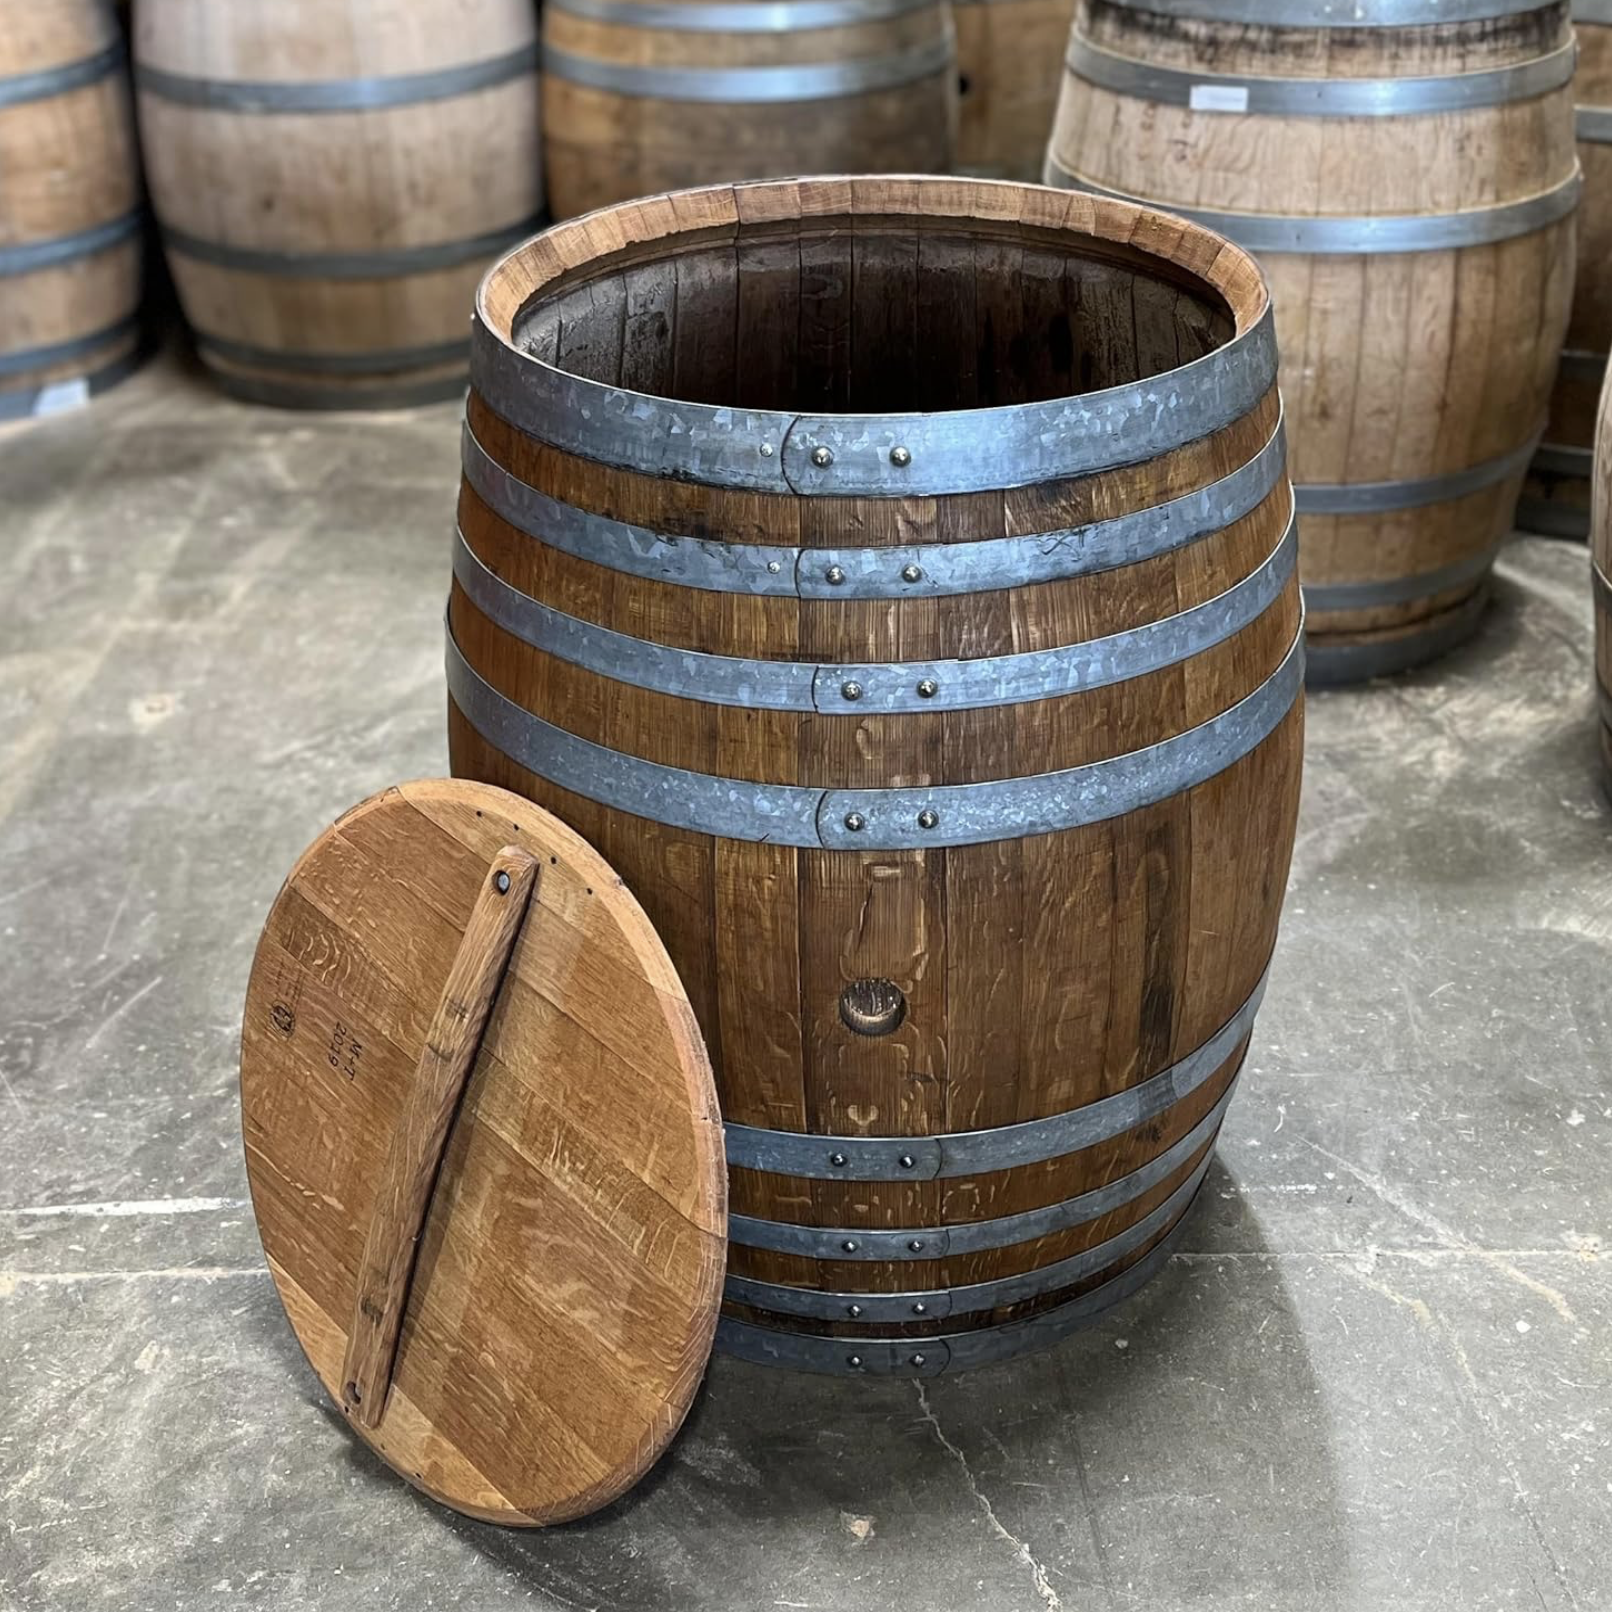 XL wooden wine barrel to store pet food